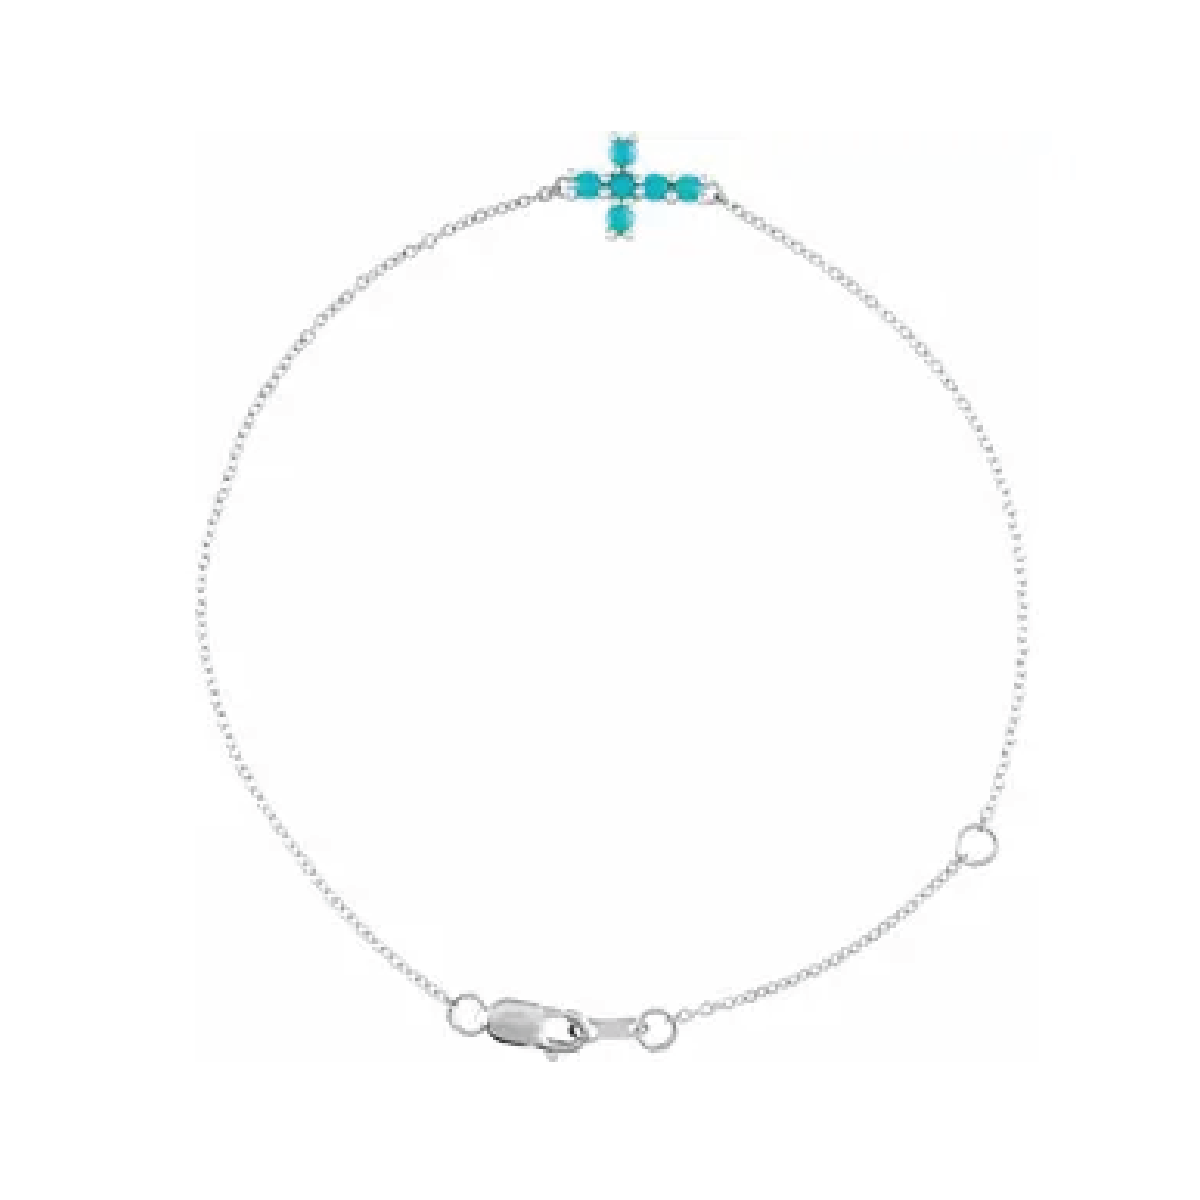 Turquoise Sideways Cross Bracelet Necklace Robyn Canady Sterling Silver 